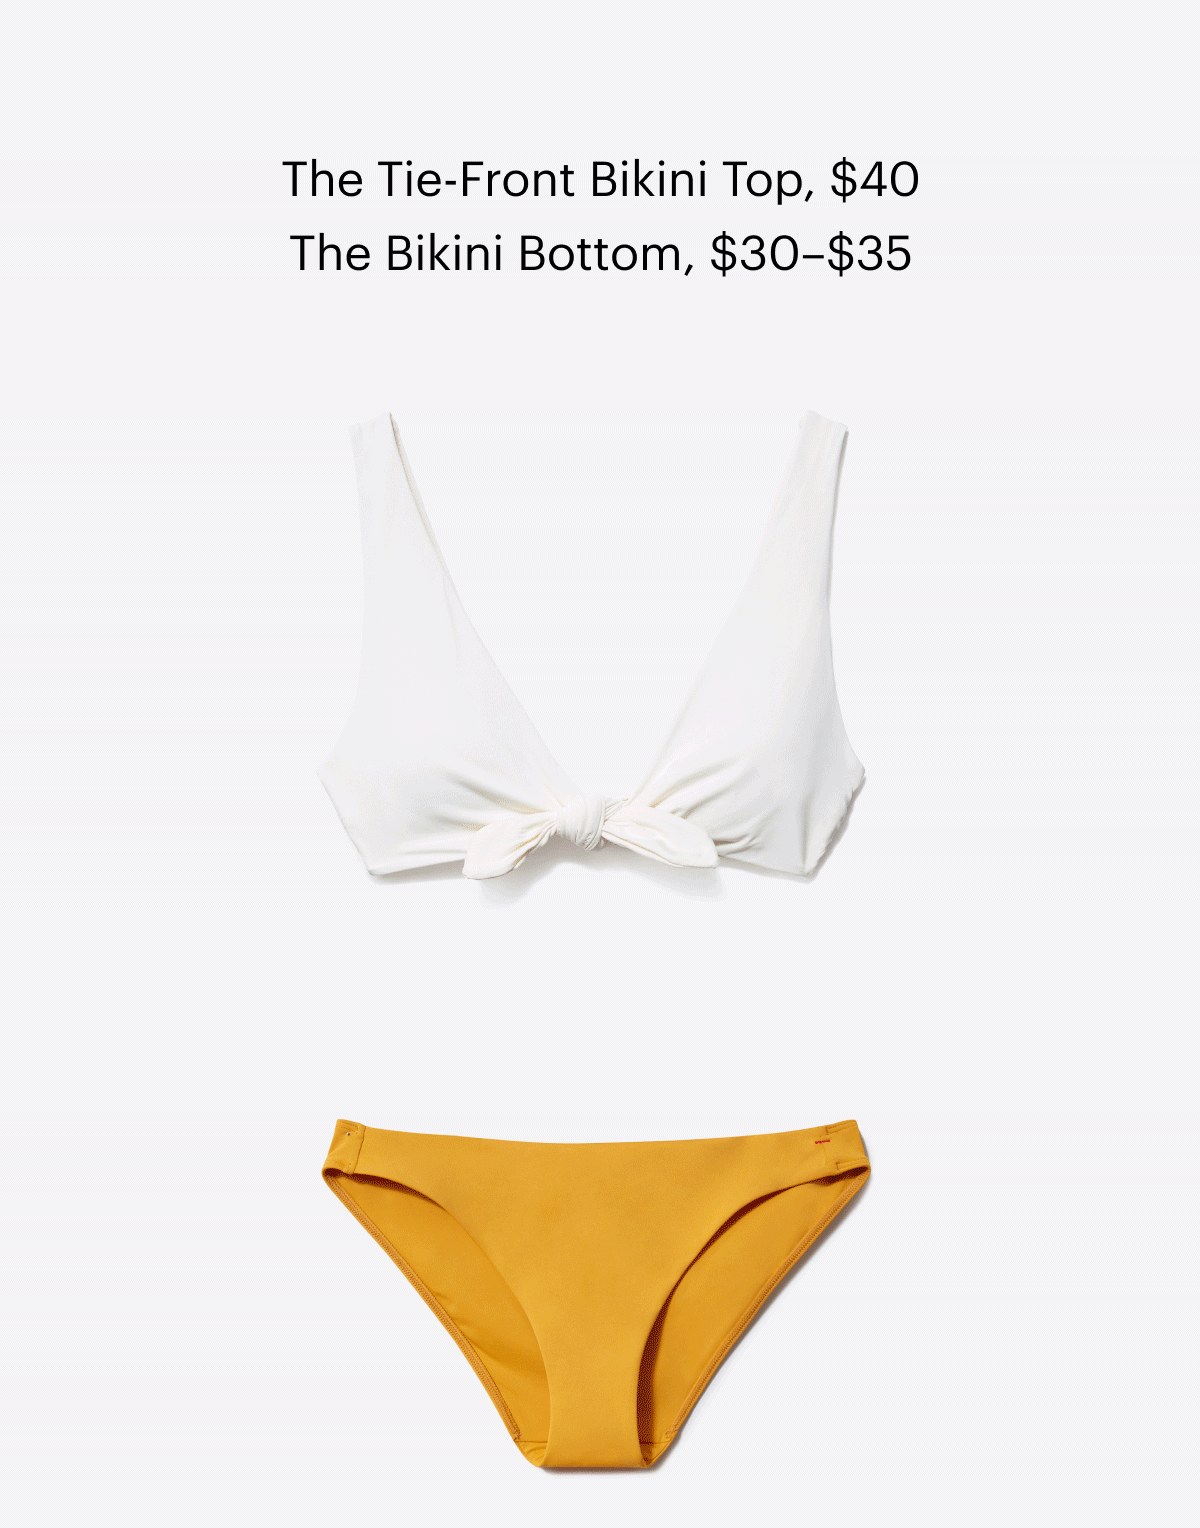 The Tie-Front Bikini Top, $40. The Bikini Bottom, $30-$35.